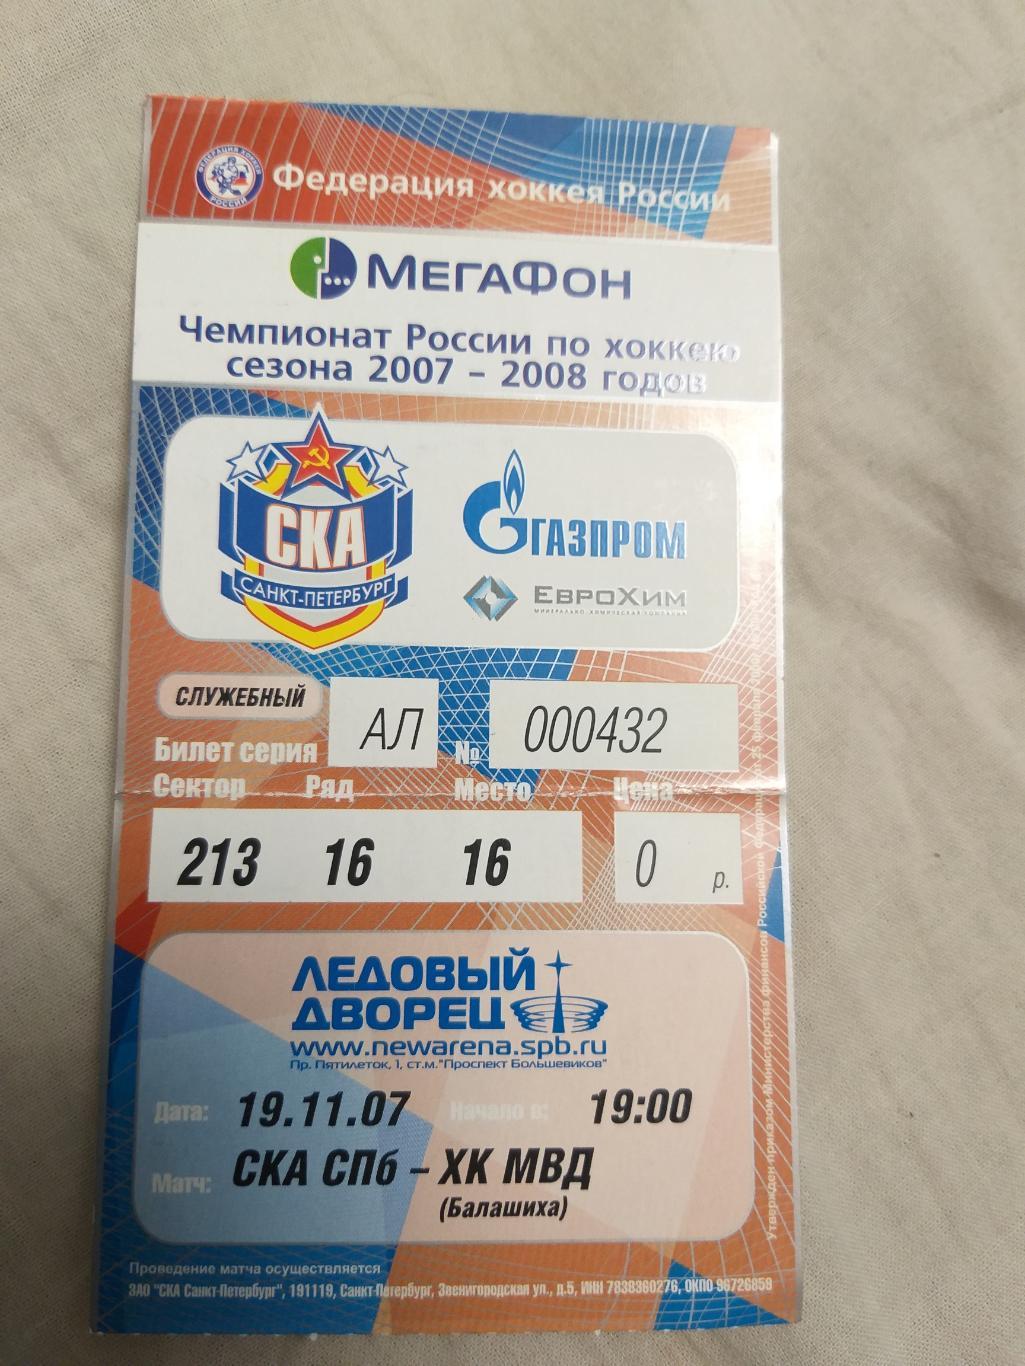 СКА(Санкт-Петербург)-МВД(Бал ашиха) 19.11.2007 билет